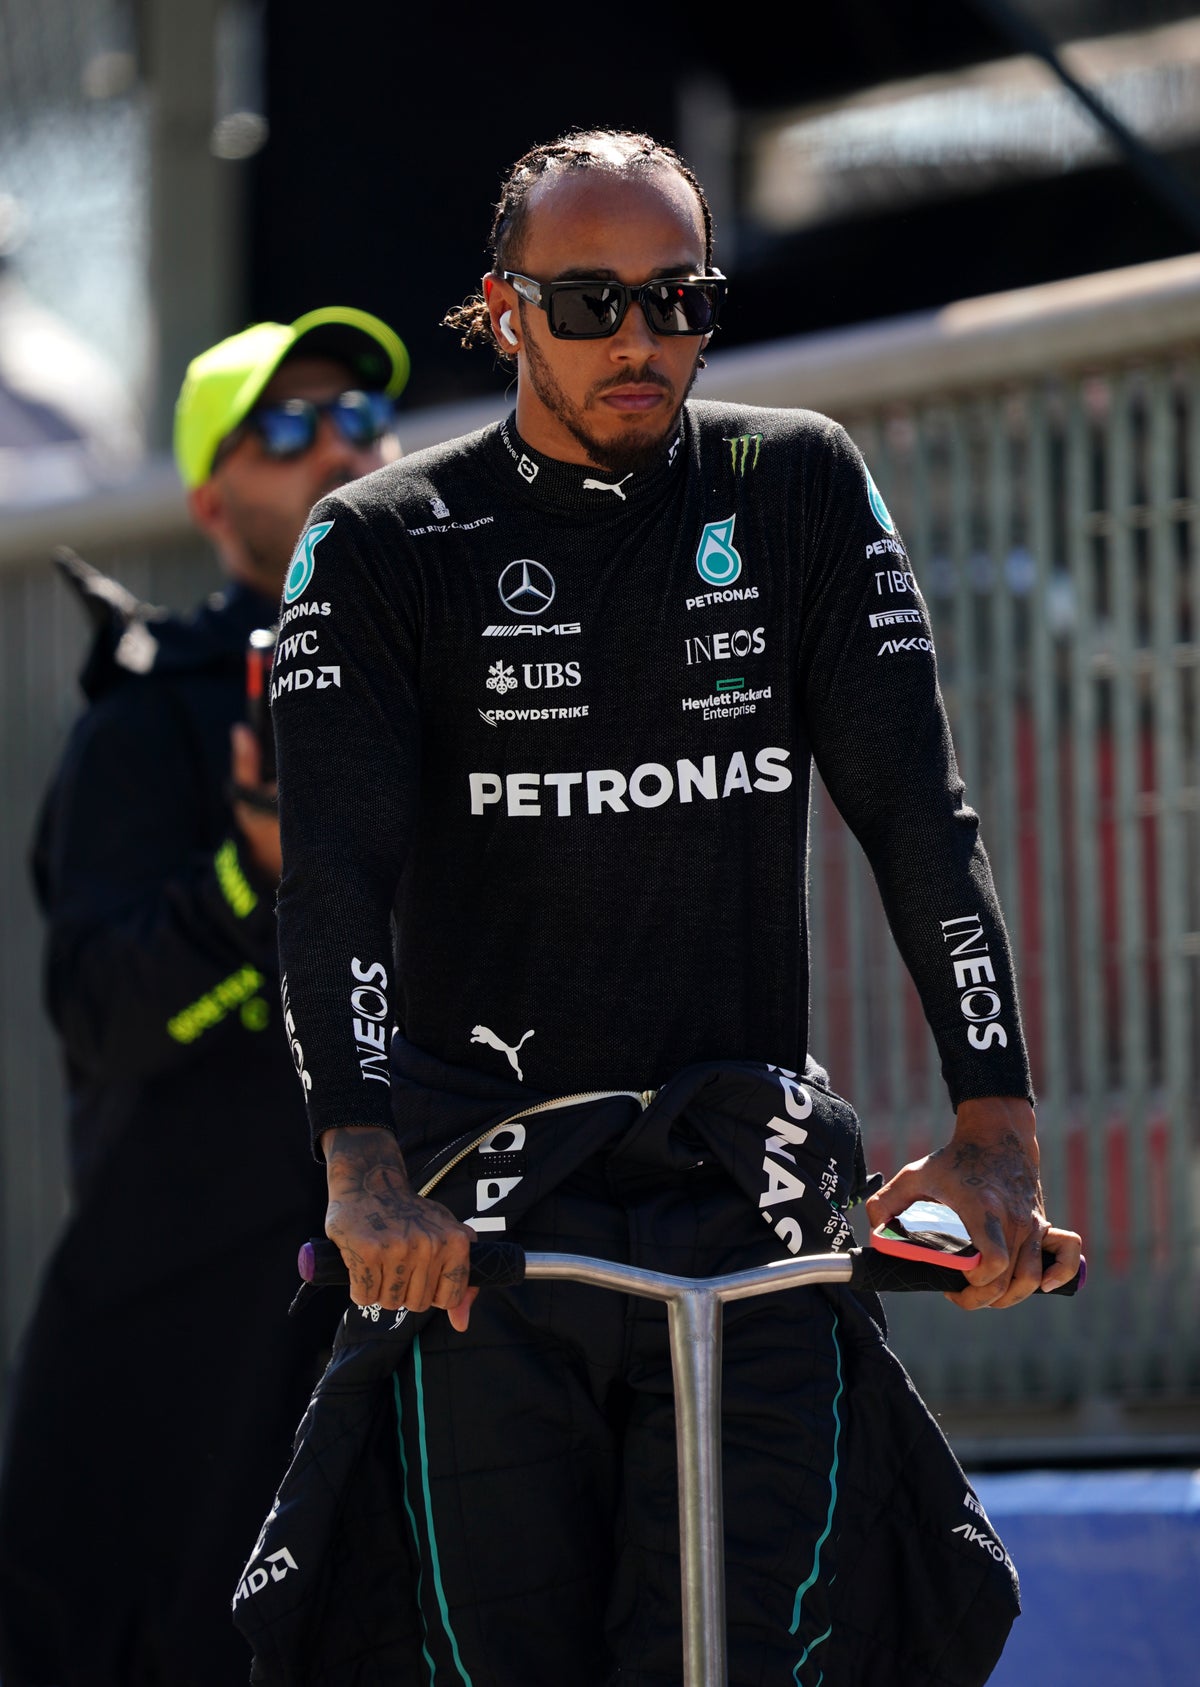 Italian Grand Prix safety-car finish ‘brings back memories’ for Lewis Hamilton